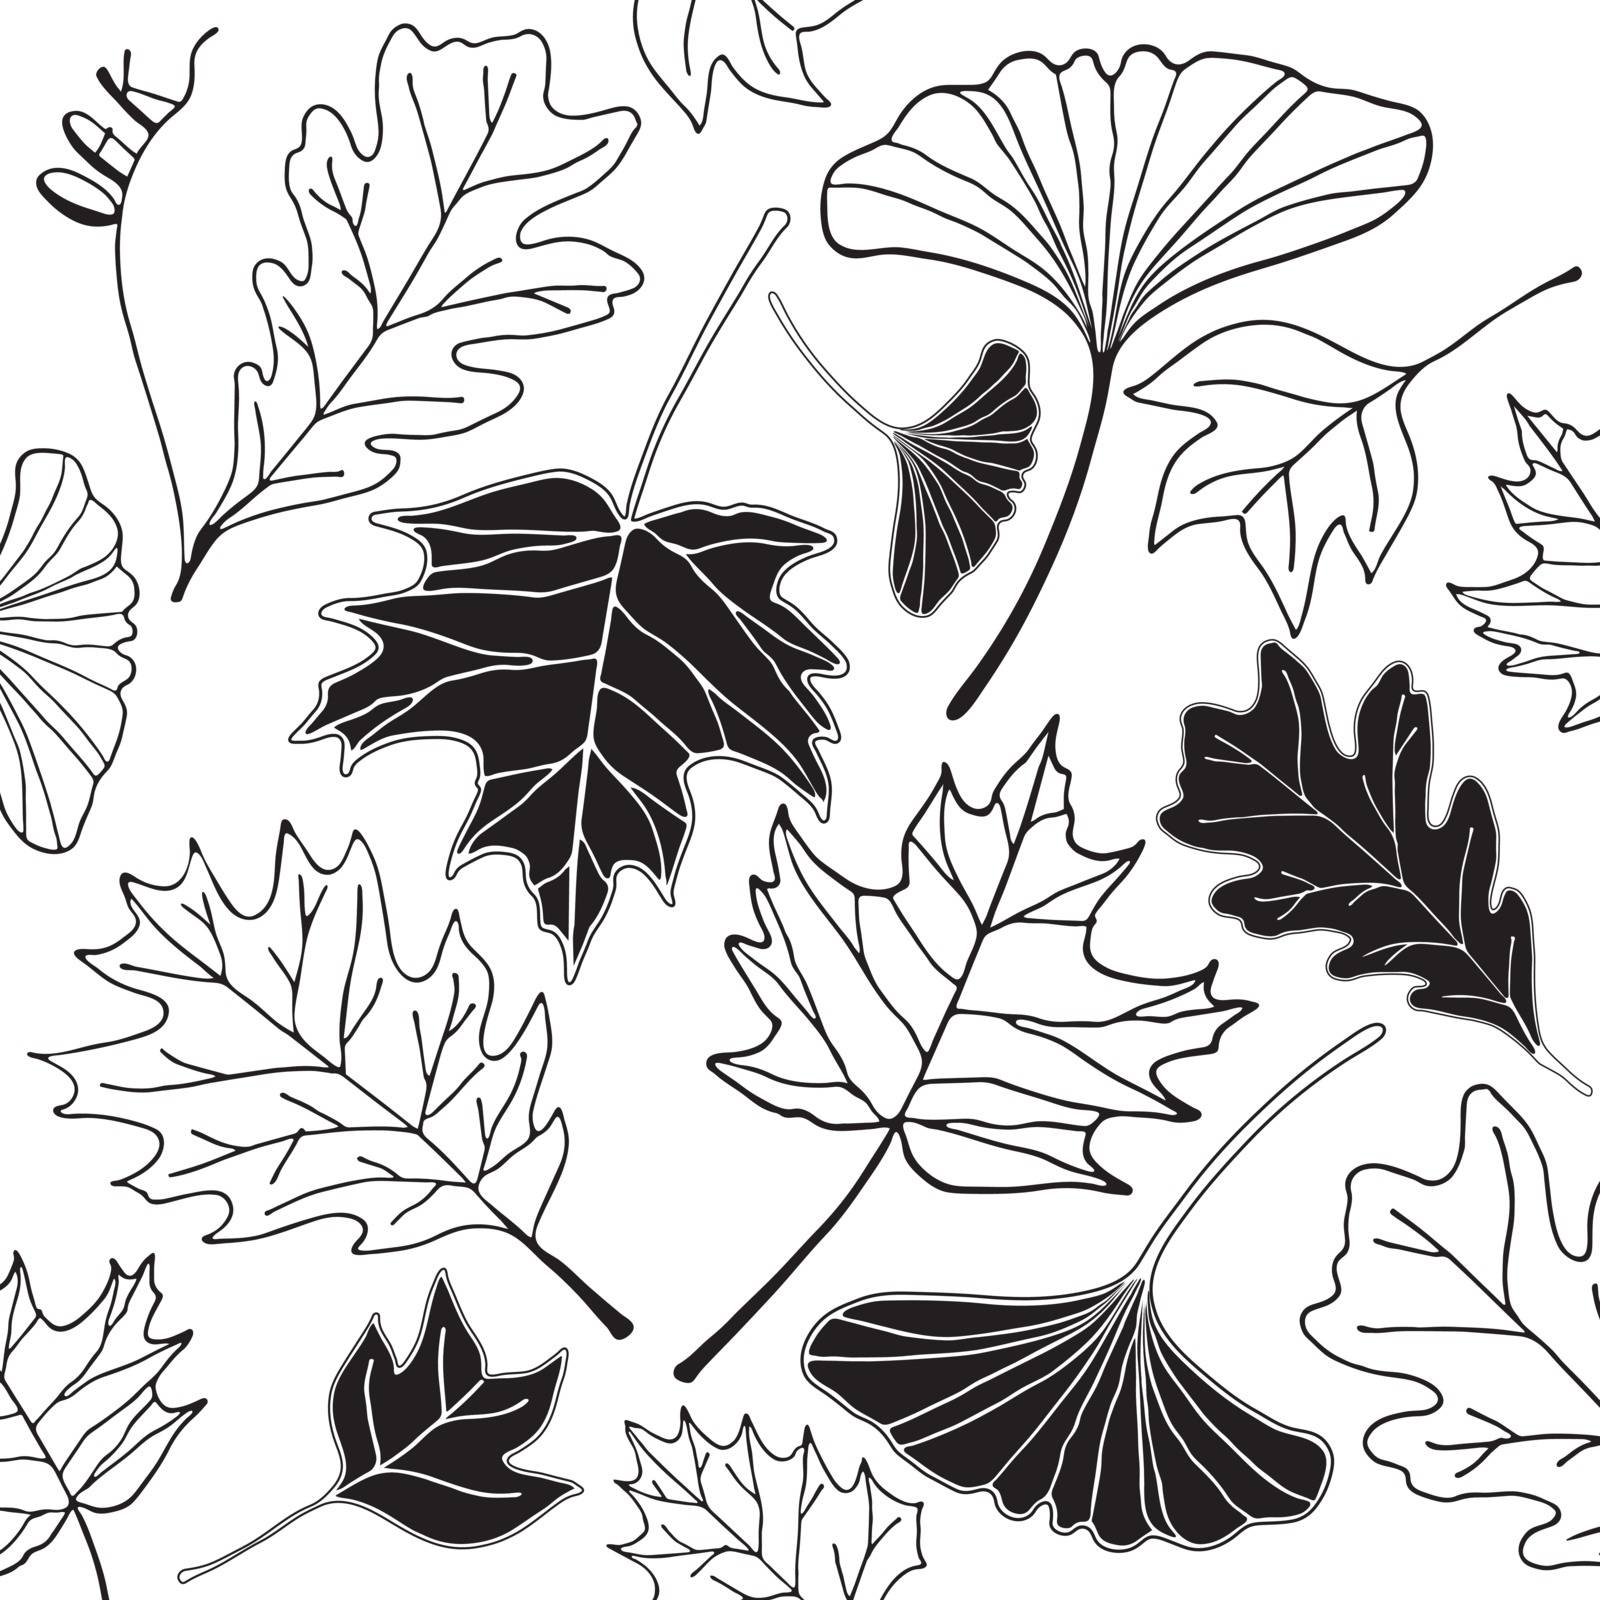 autumn leaf hand drawn doodle illustration by polarbearstudio